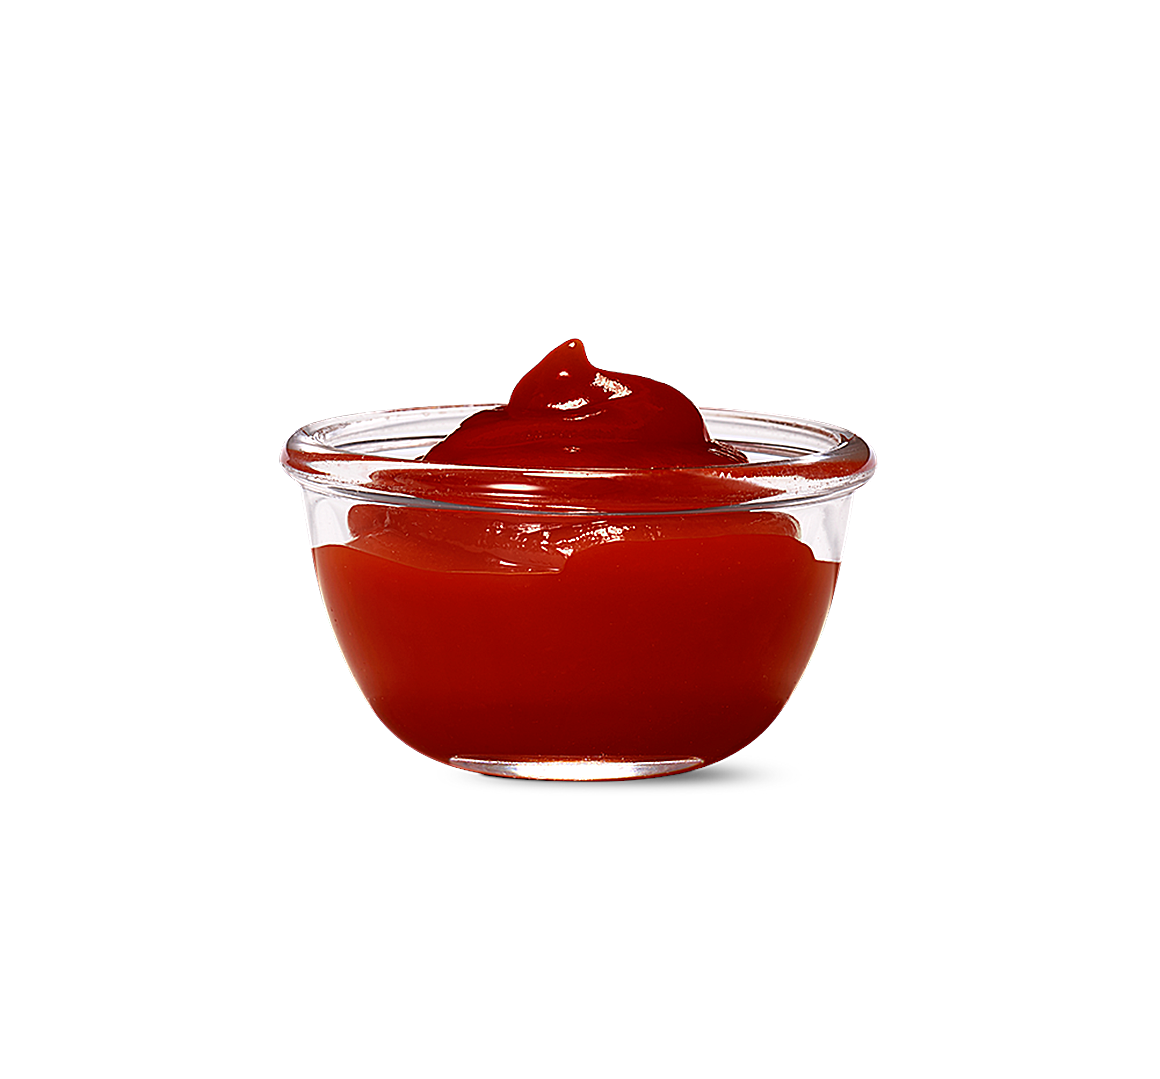 Sriracha ketchup